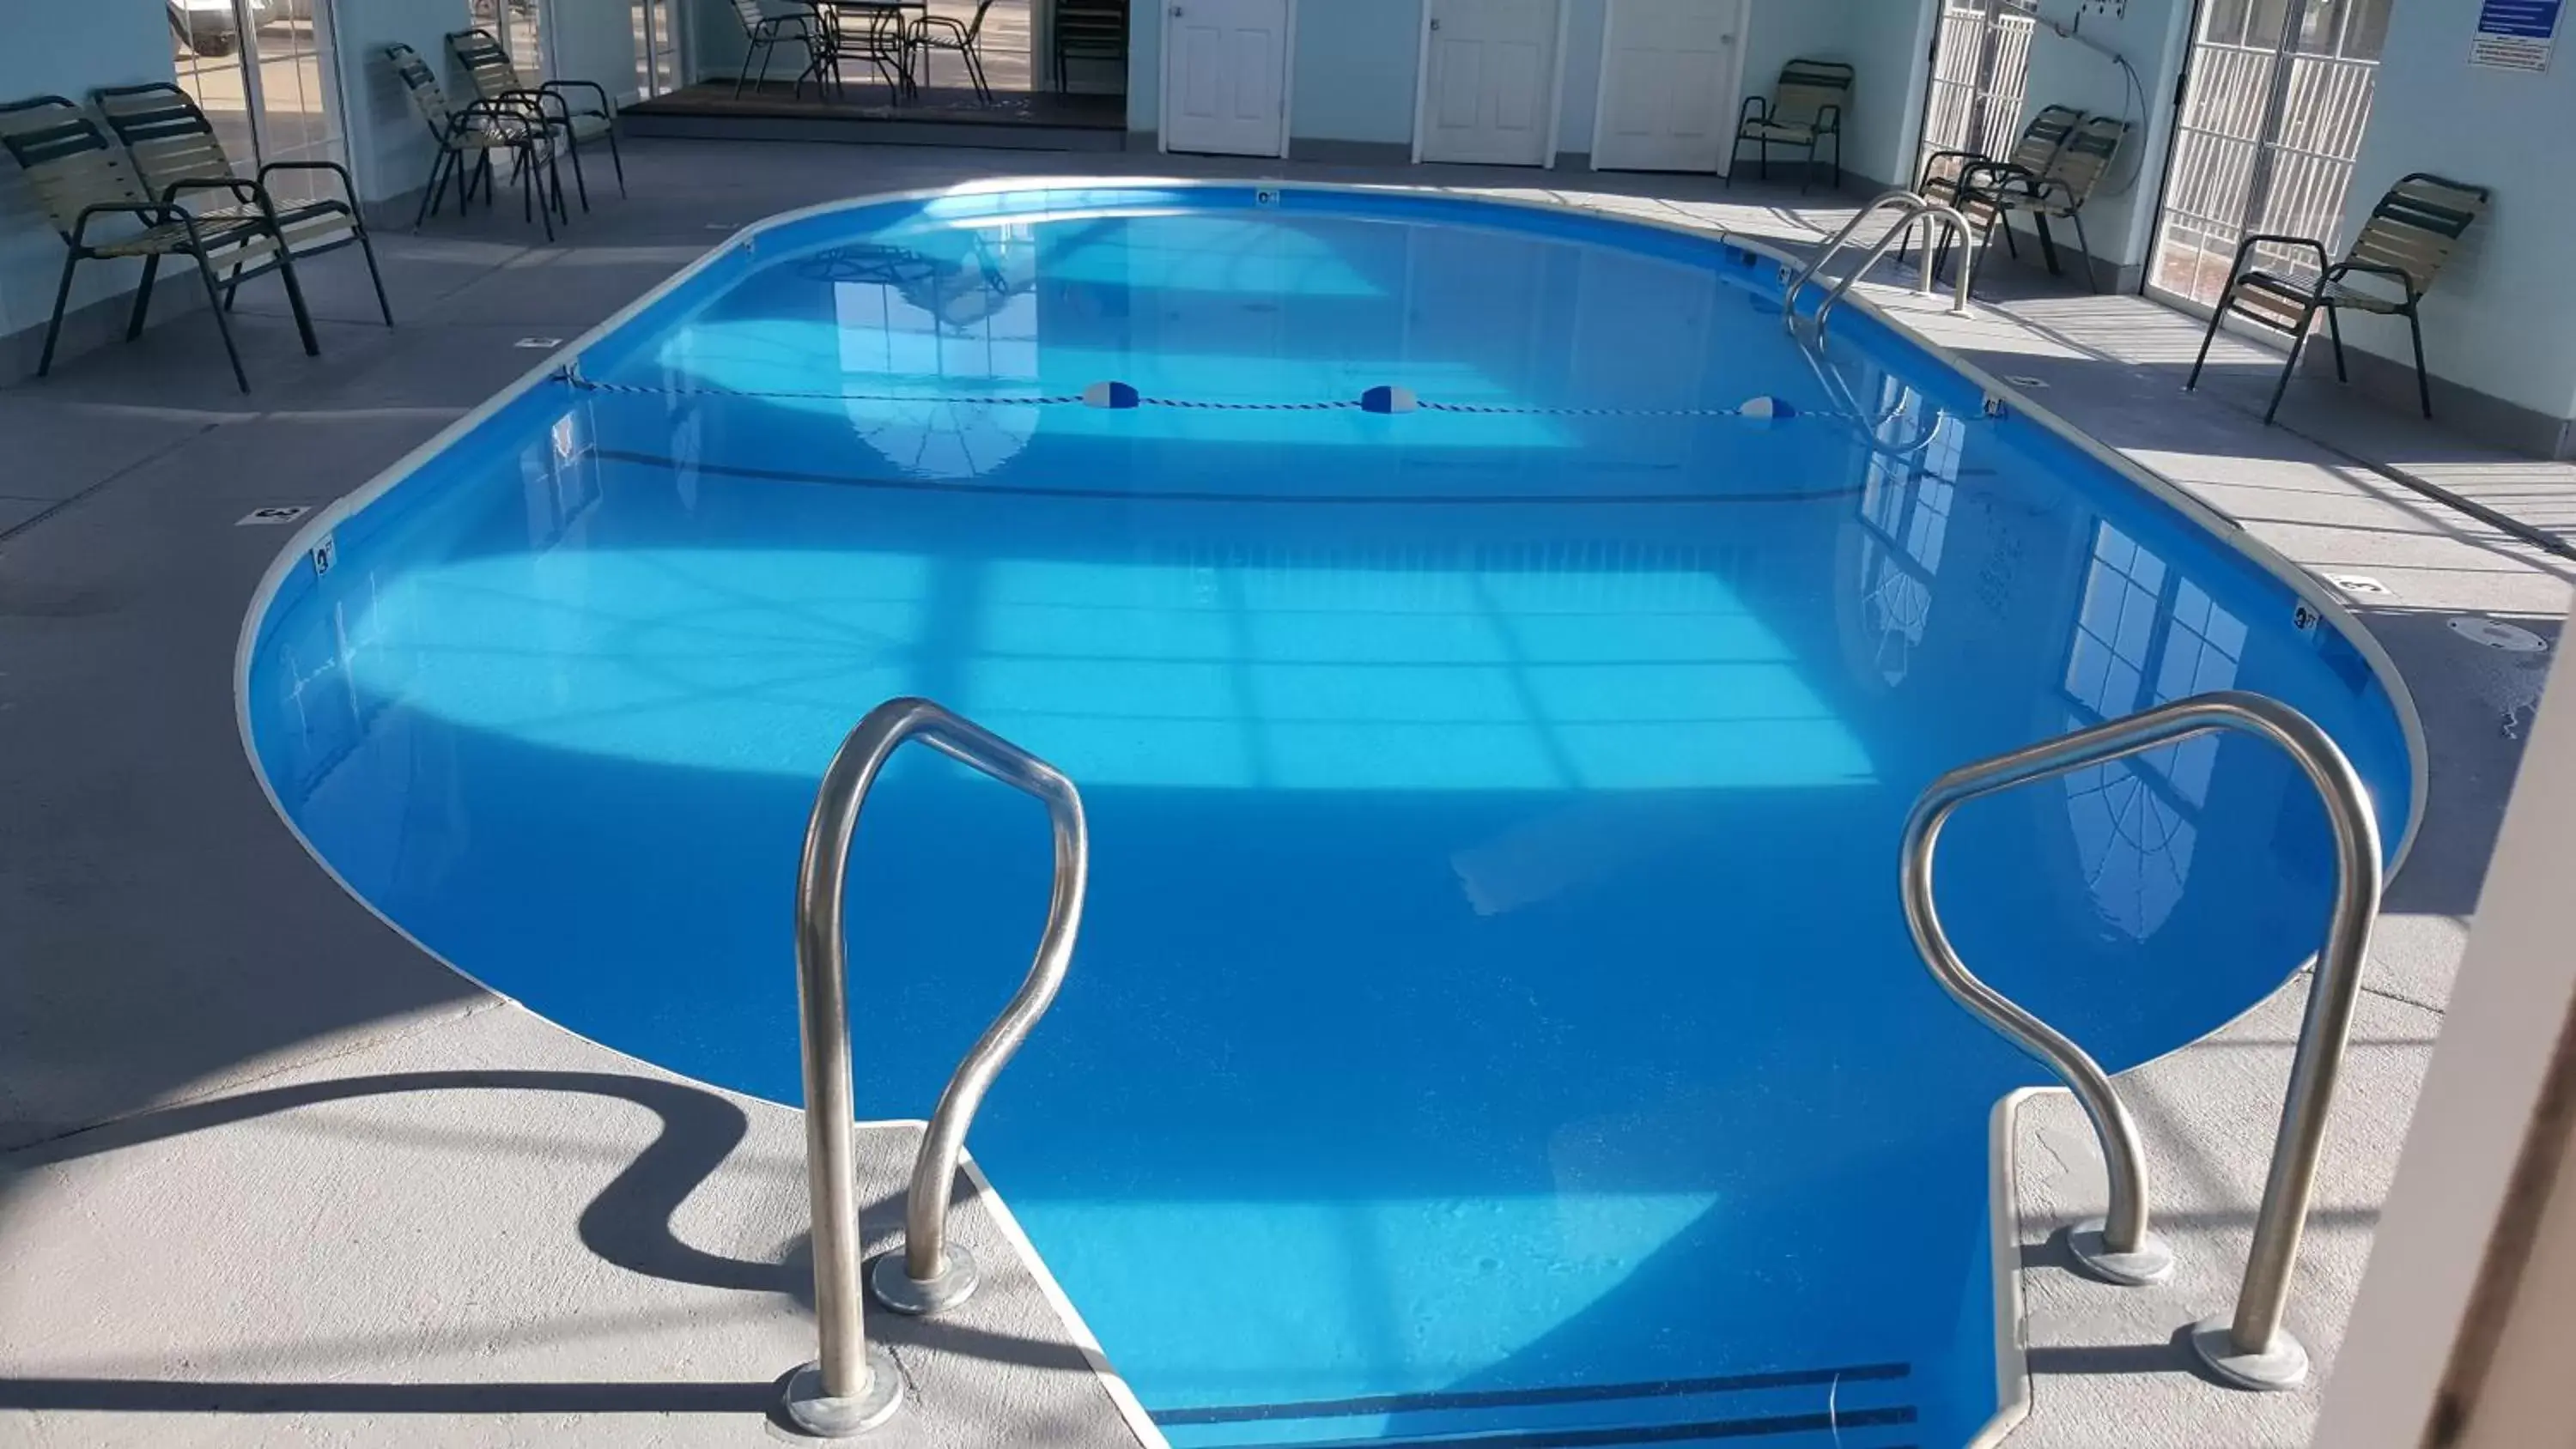 Swimming pool in Carriage House Inn